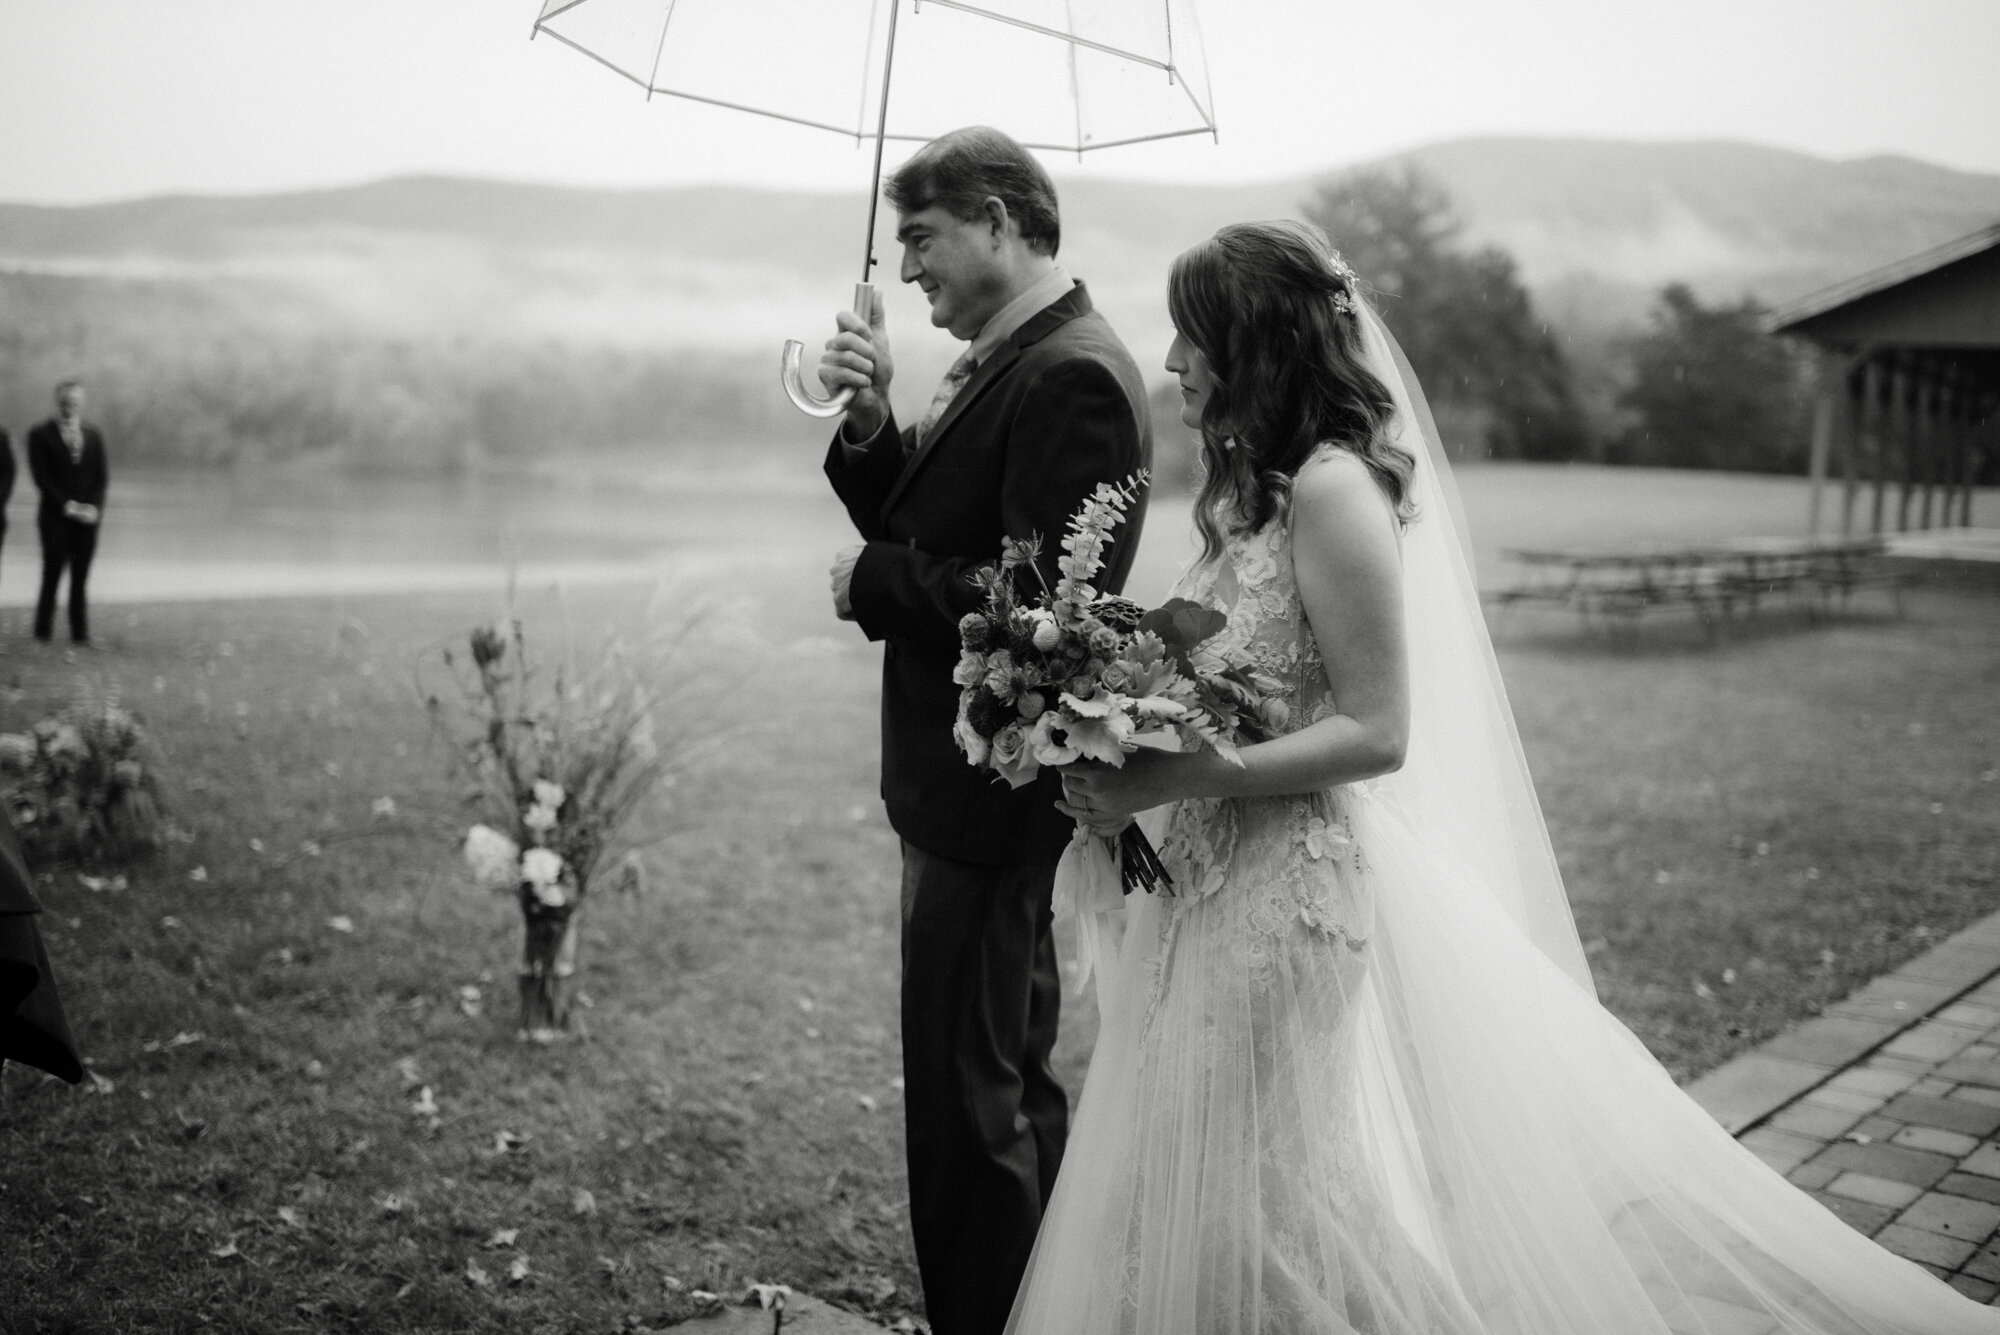 Sarah and Peyton - Rainy Autumn Wedding - Small Virginia Wedding - White Sails Creative Photography_16.jpg